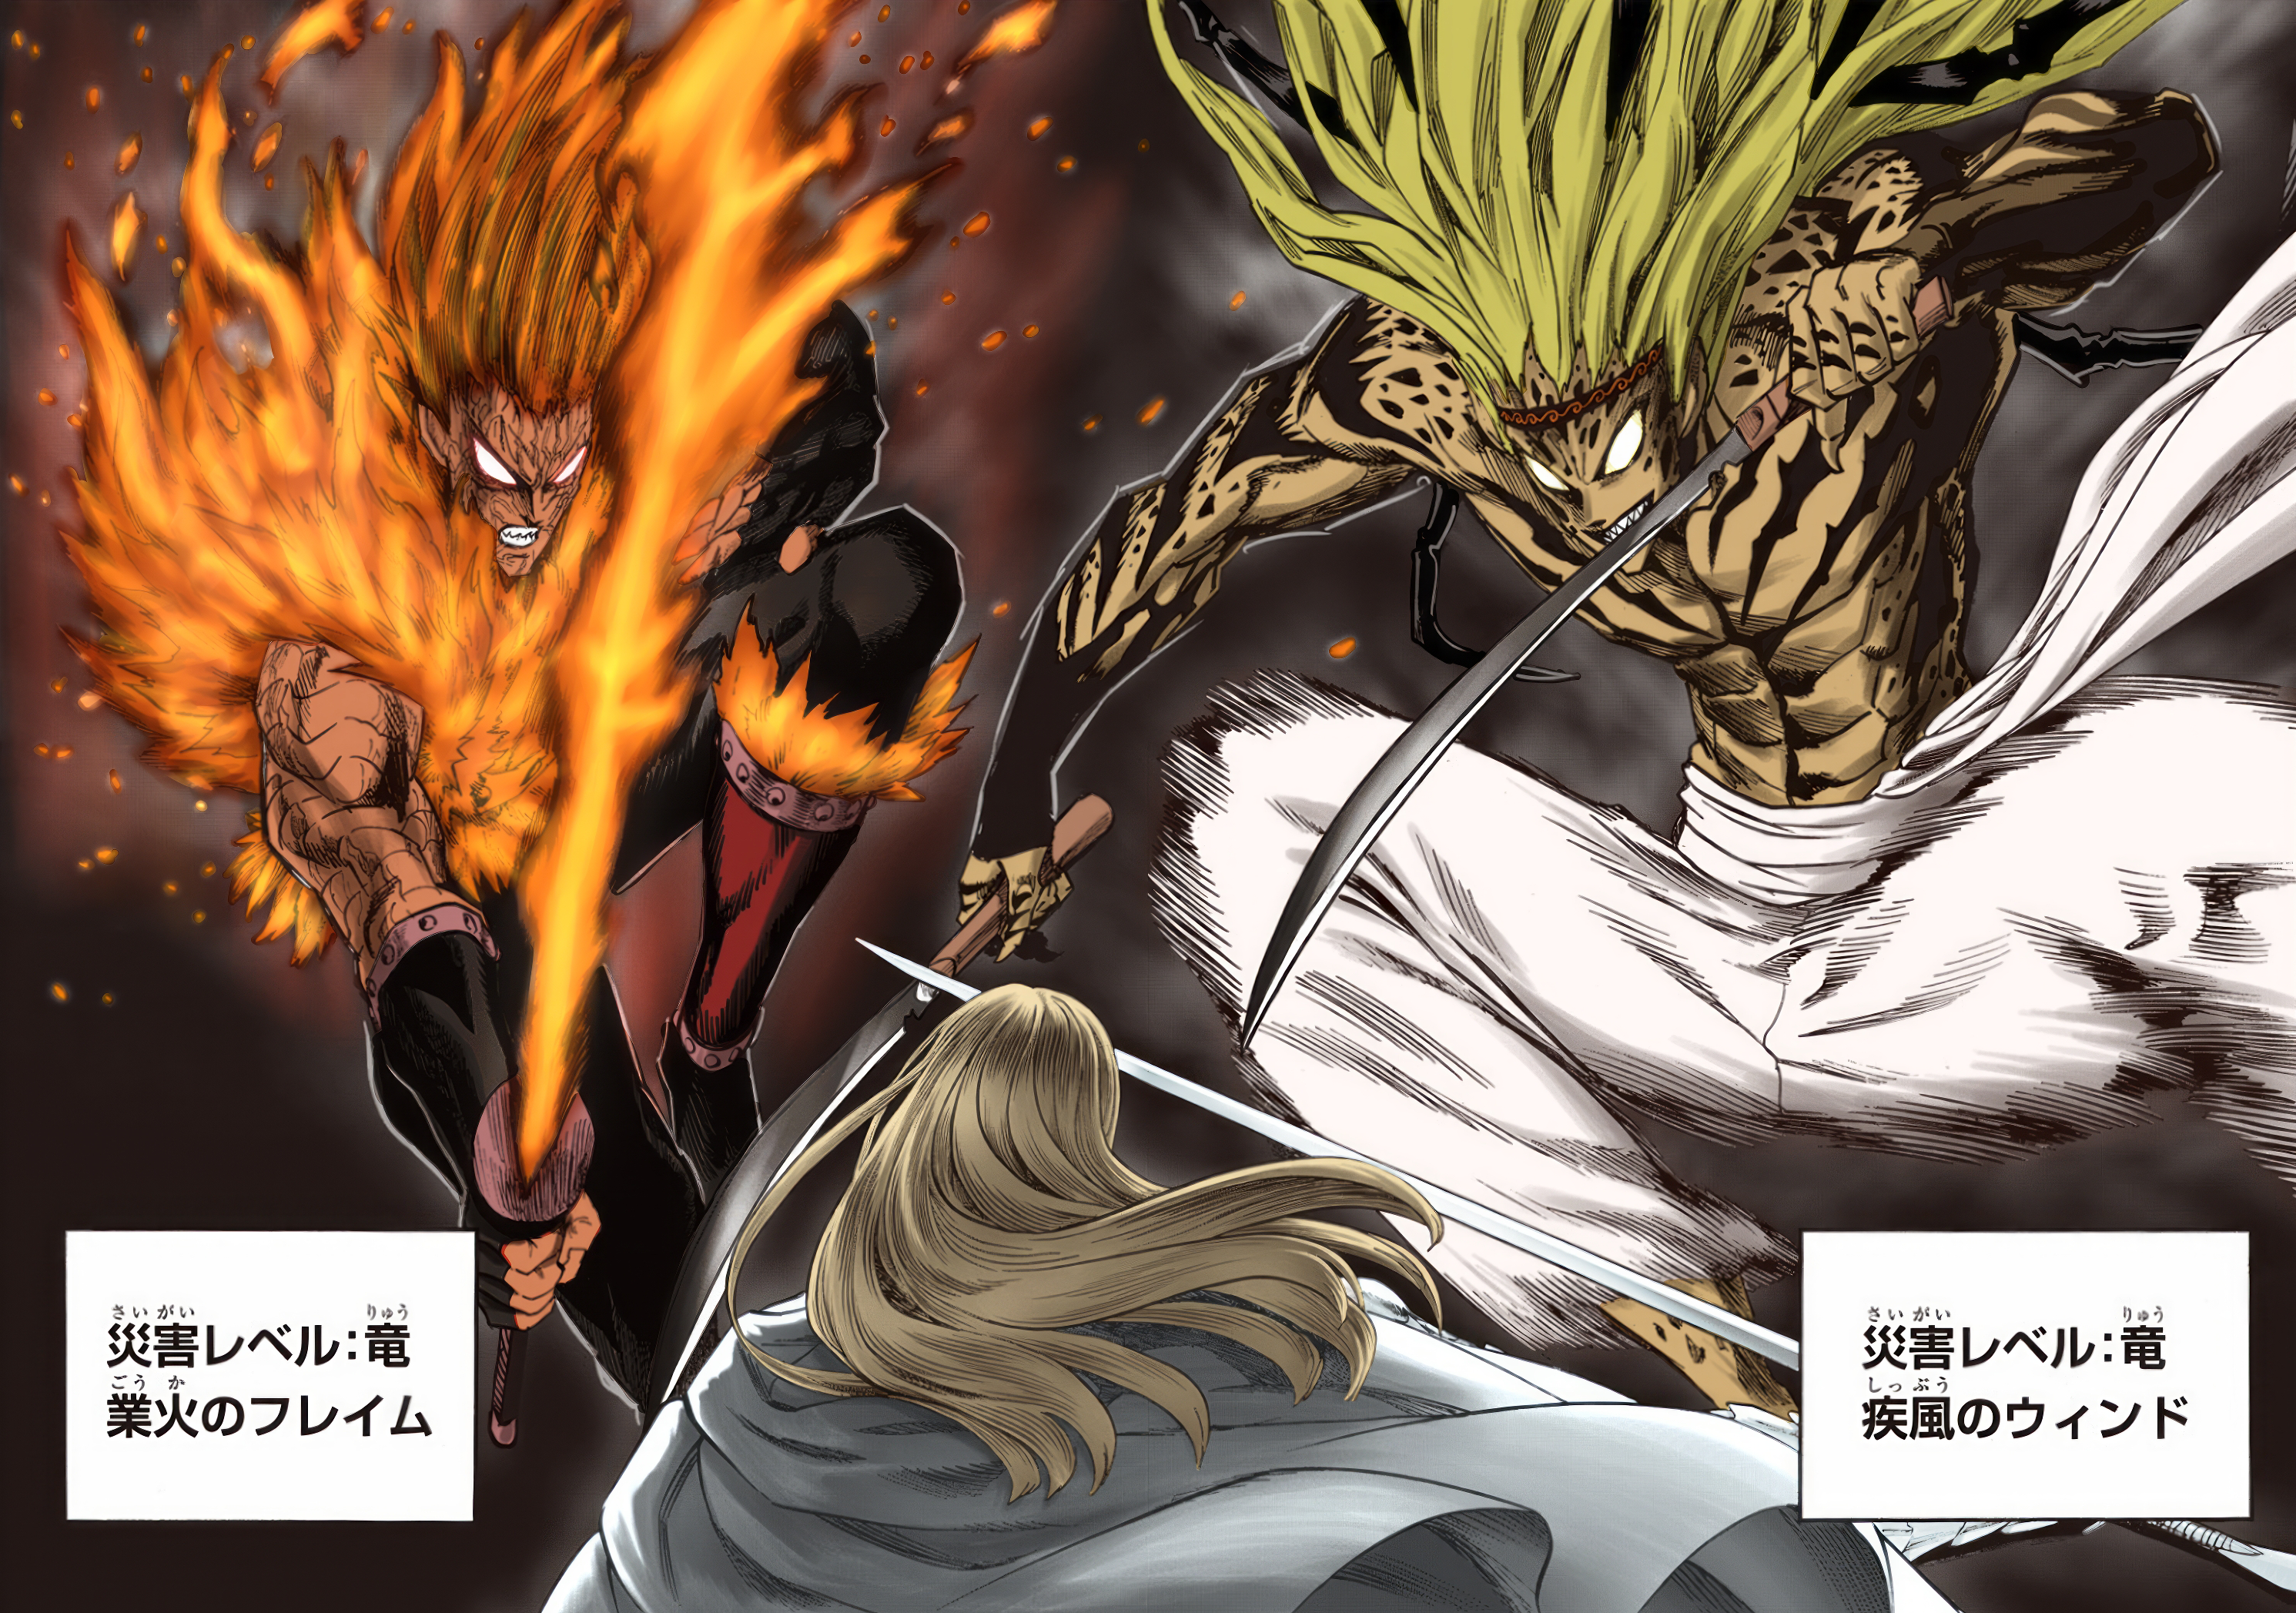 Saitama One Punch Man Anime Wallpaper 4k HD ID:3218